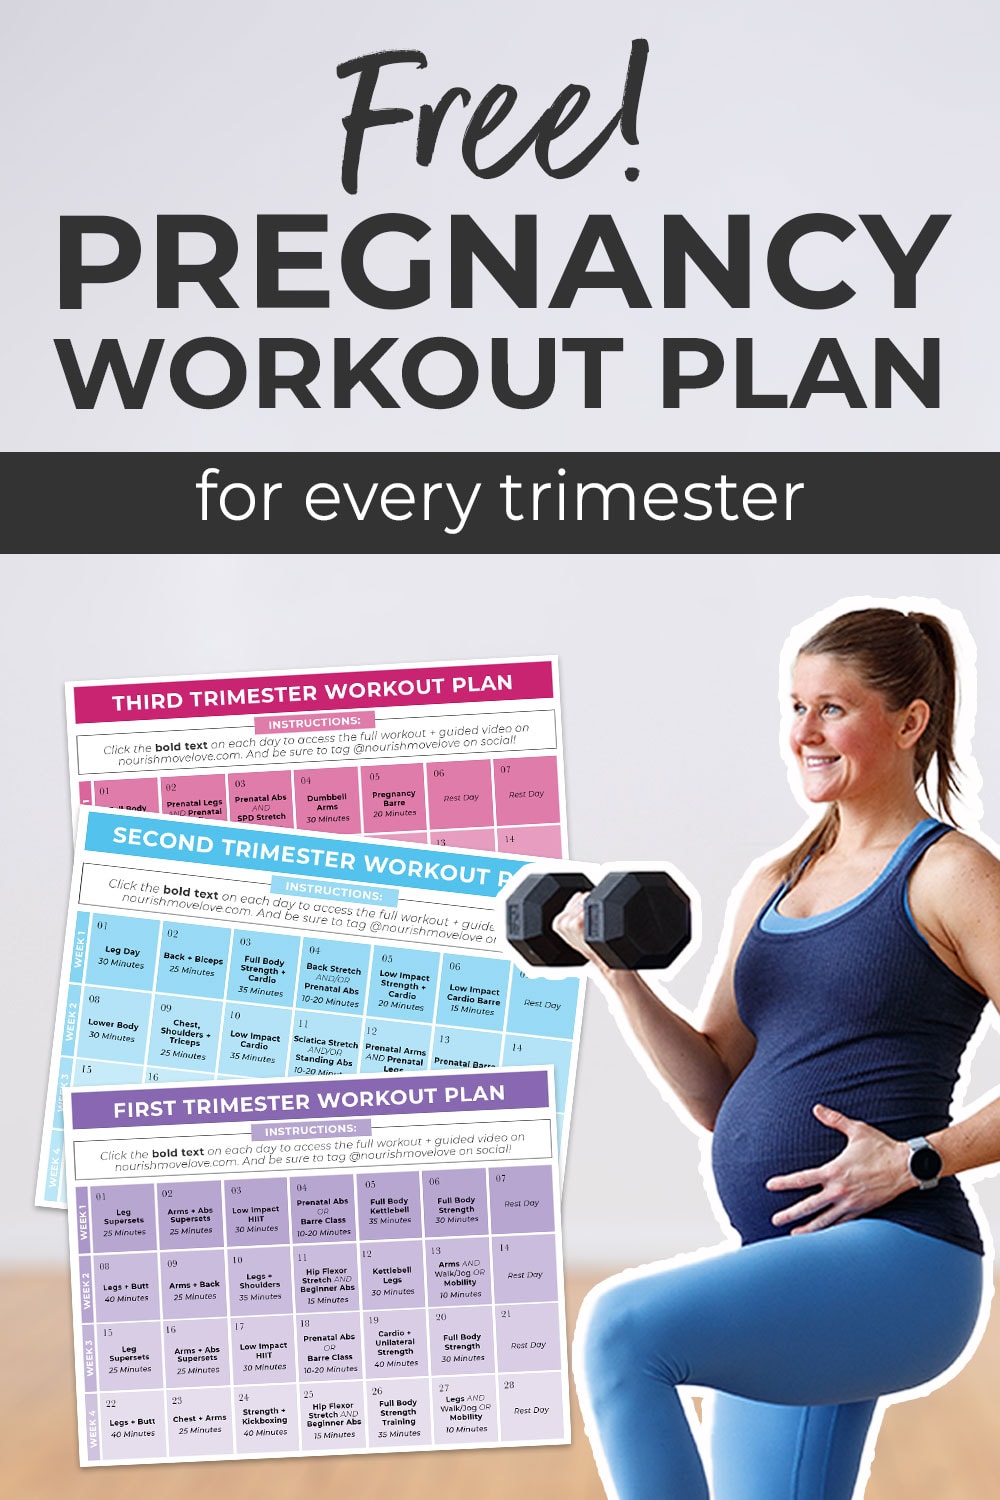 Free Pregnancy Workout Plan (by Trimester) | Nourish Move Love